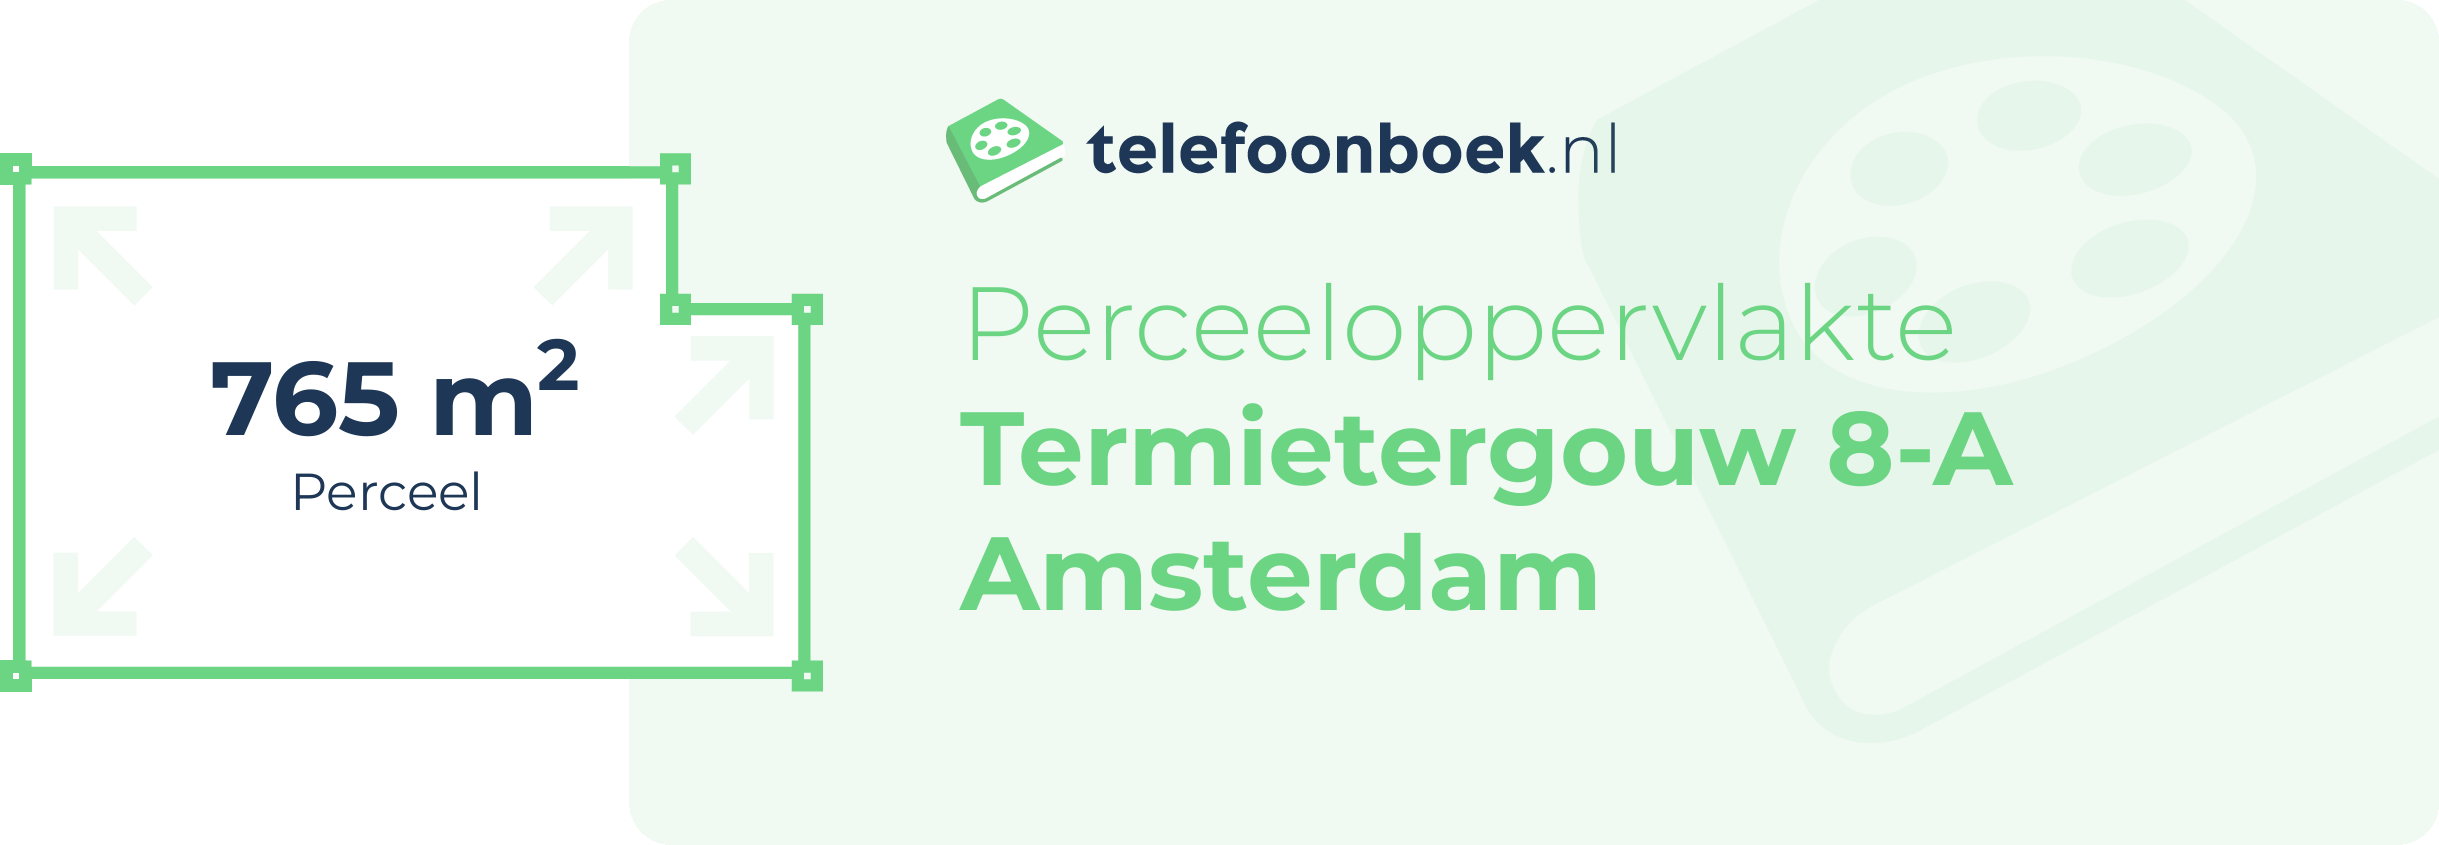 Perceeloppervlakte Termietergouw 8-A Amsterdam